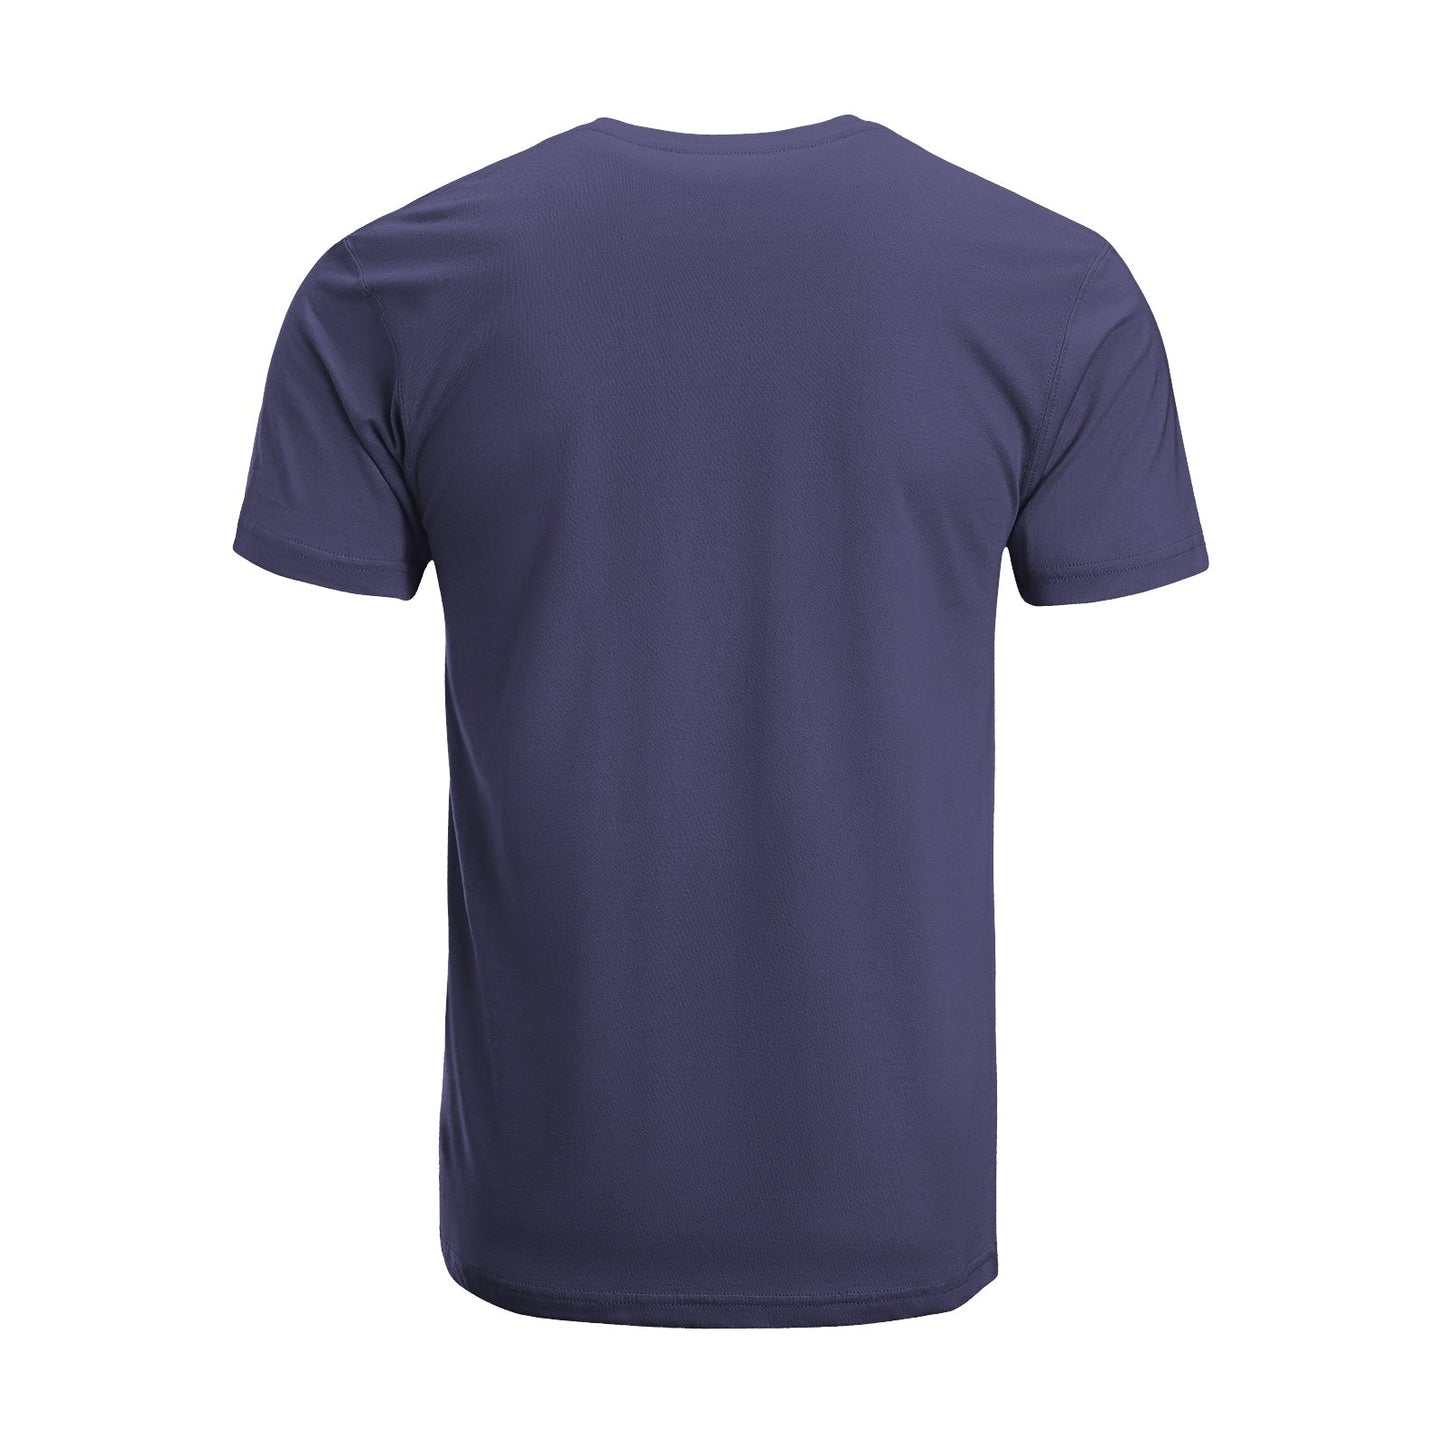 Unisex Short Sleeve Crew Neck Cotton Jersey T-Shirt Gym No. 09 - Tara-Outfits.com